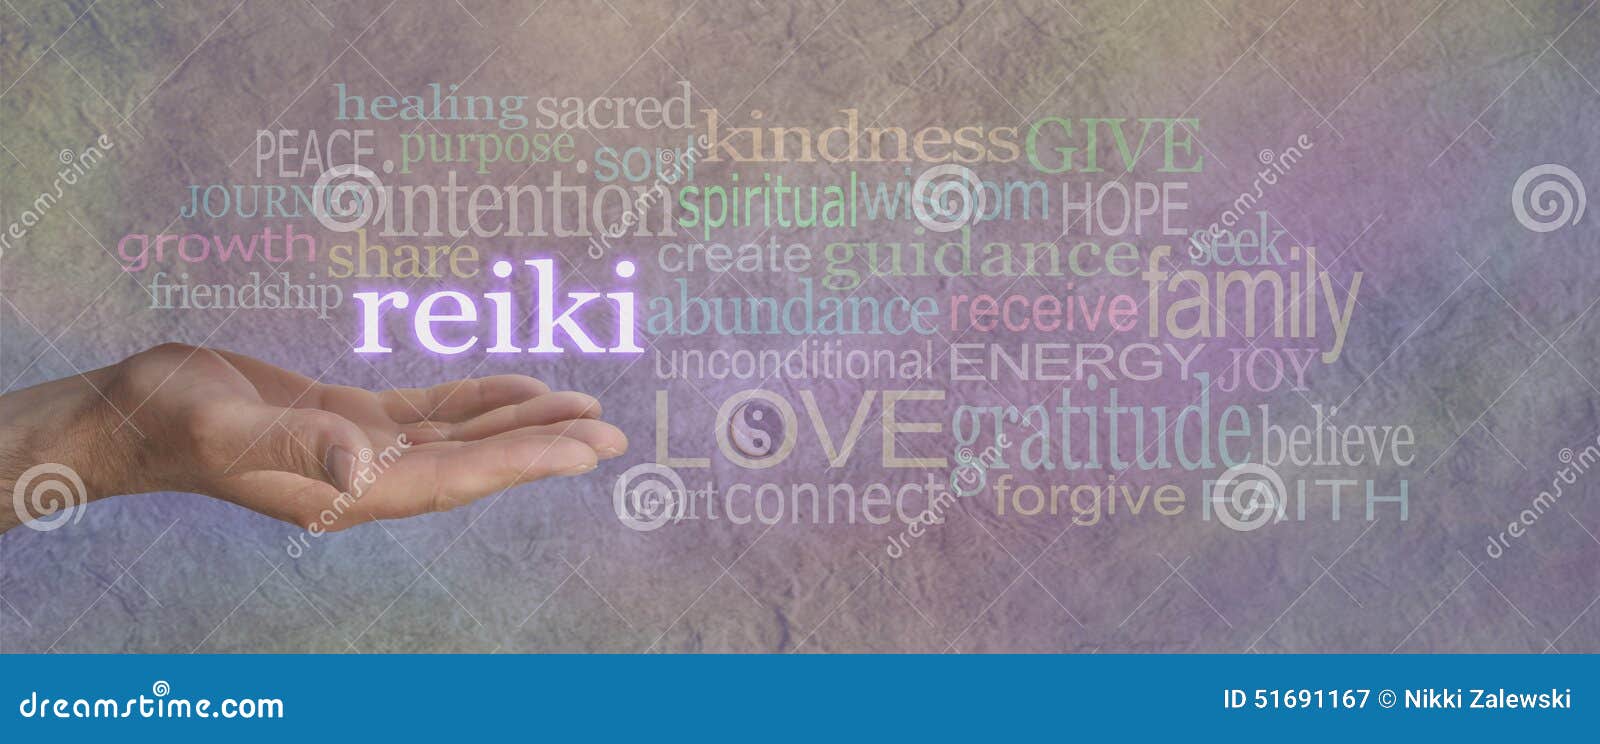 male reiki healer with healing word cloud